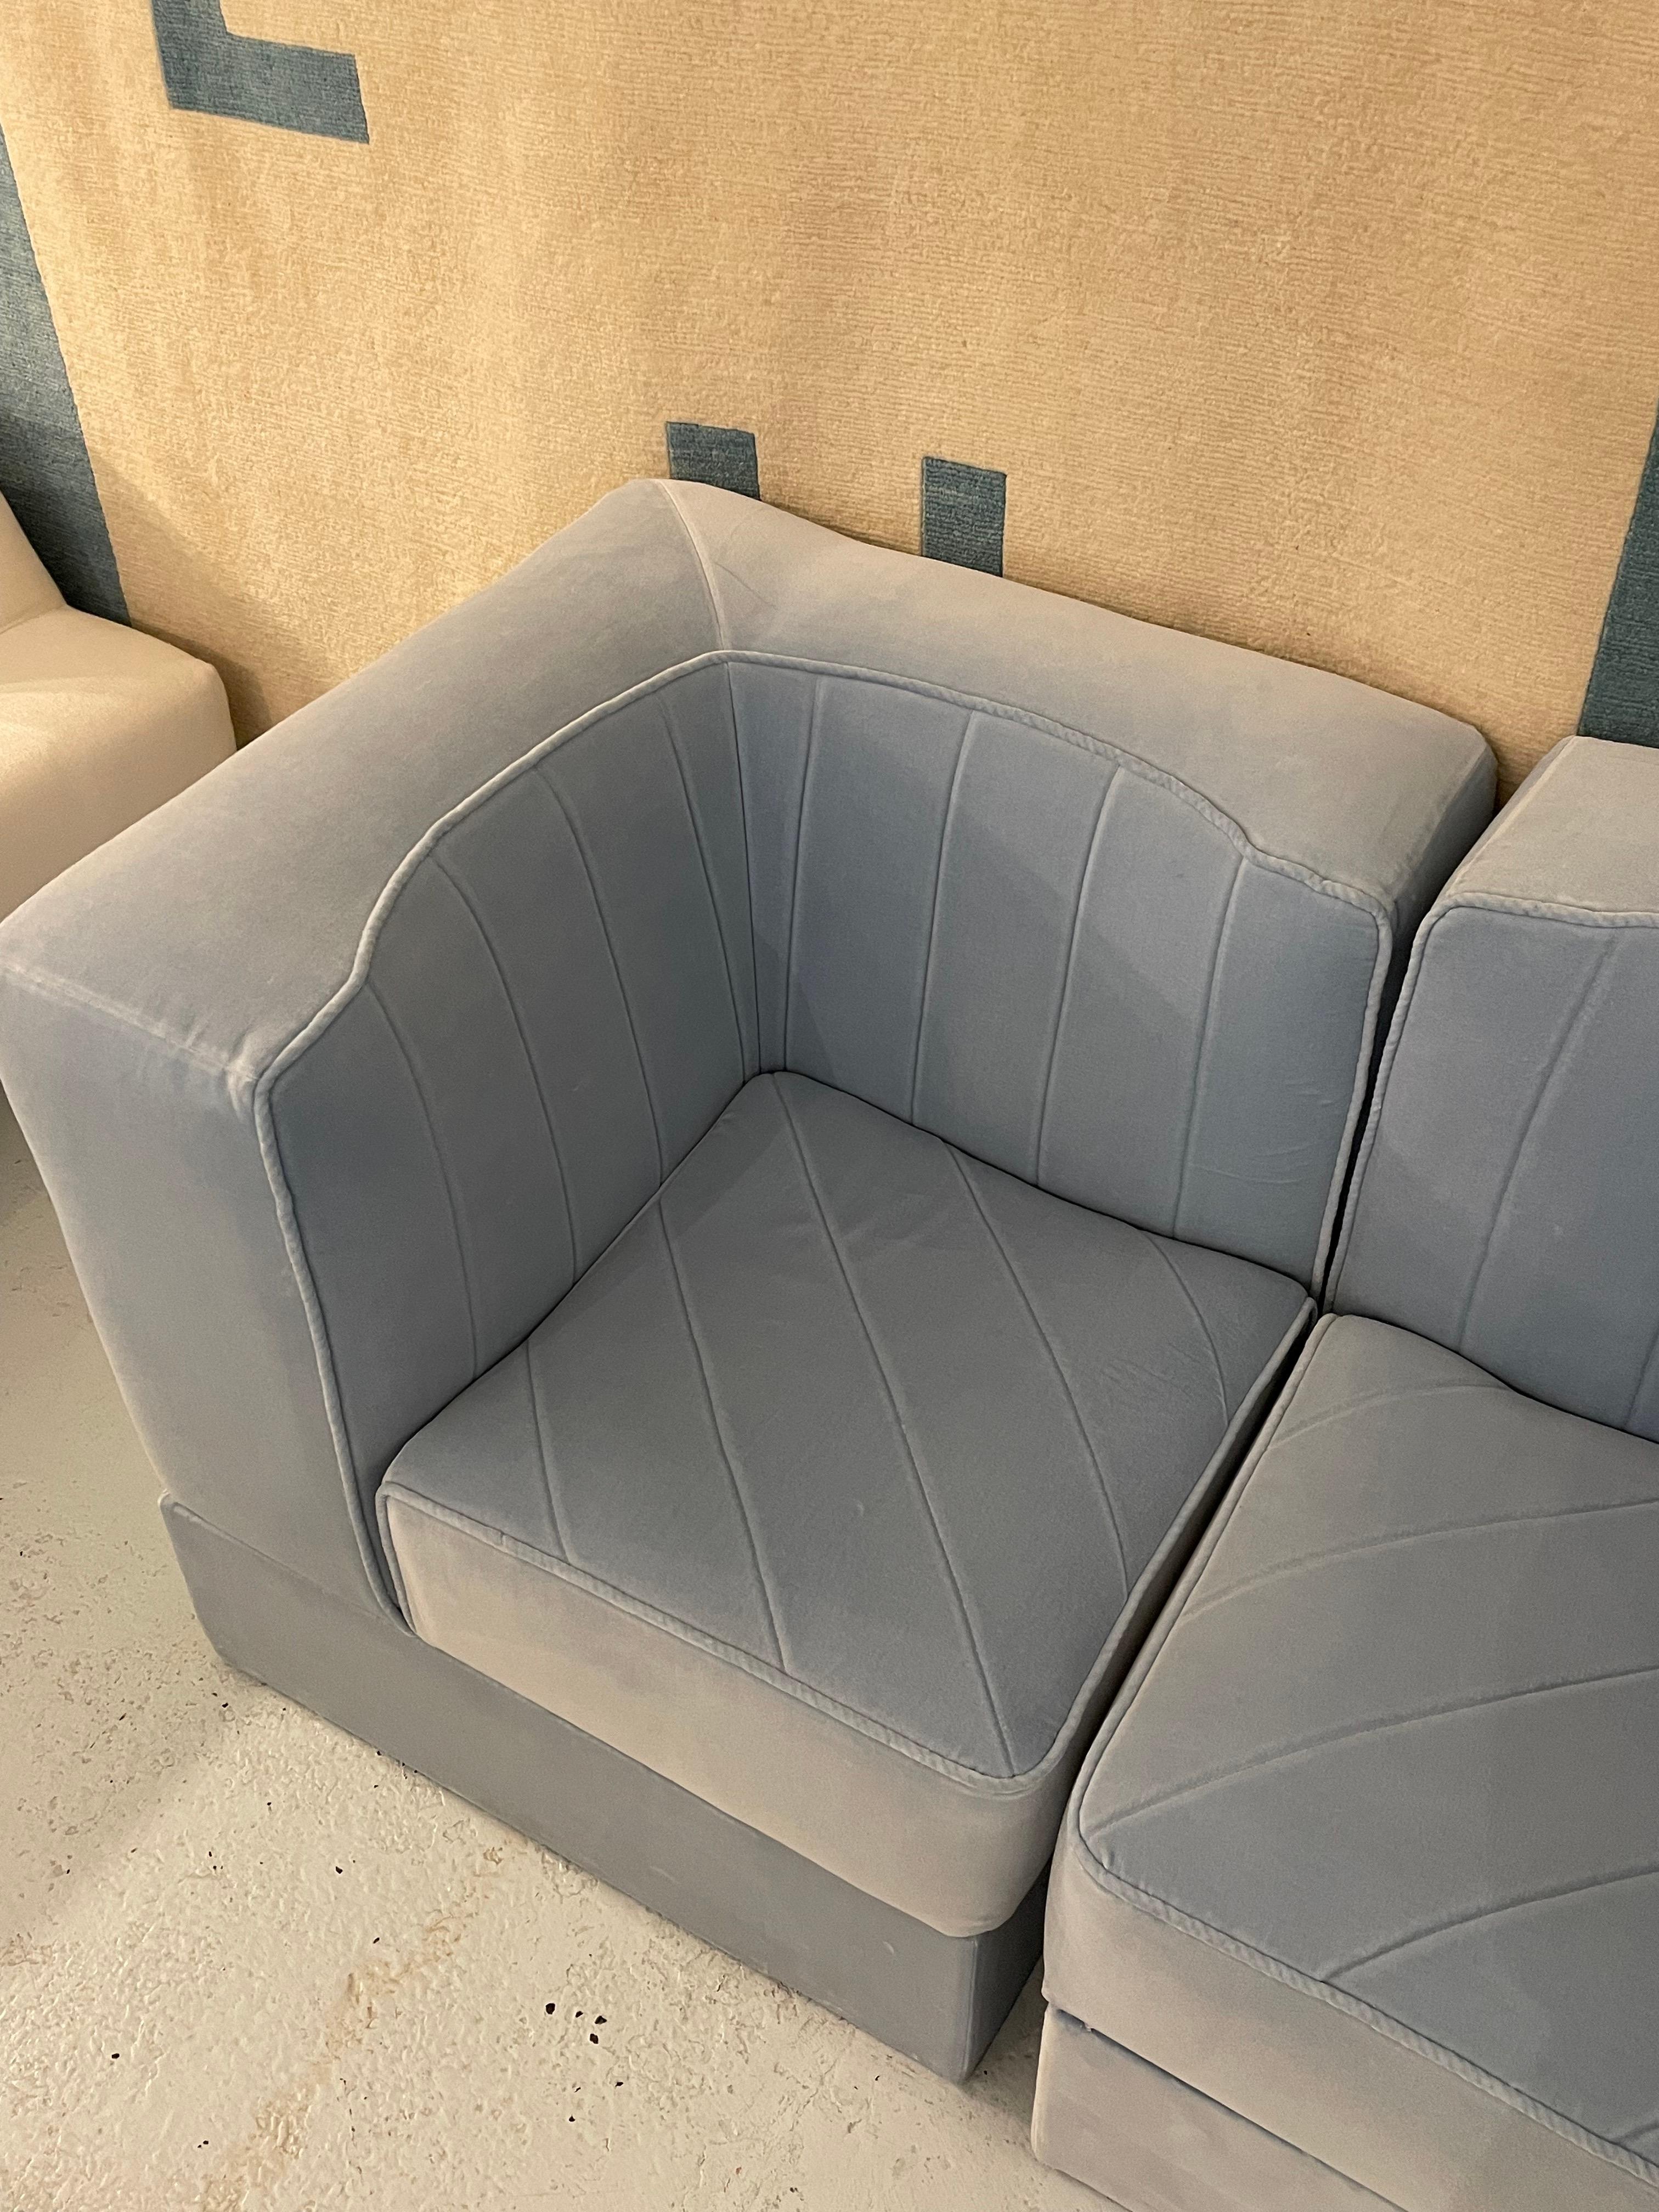 Tito Agnoli Modular Sofa In Excellent Condition For Sale In London, England